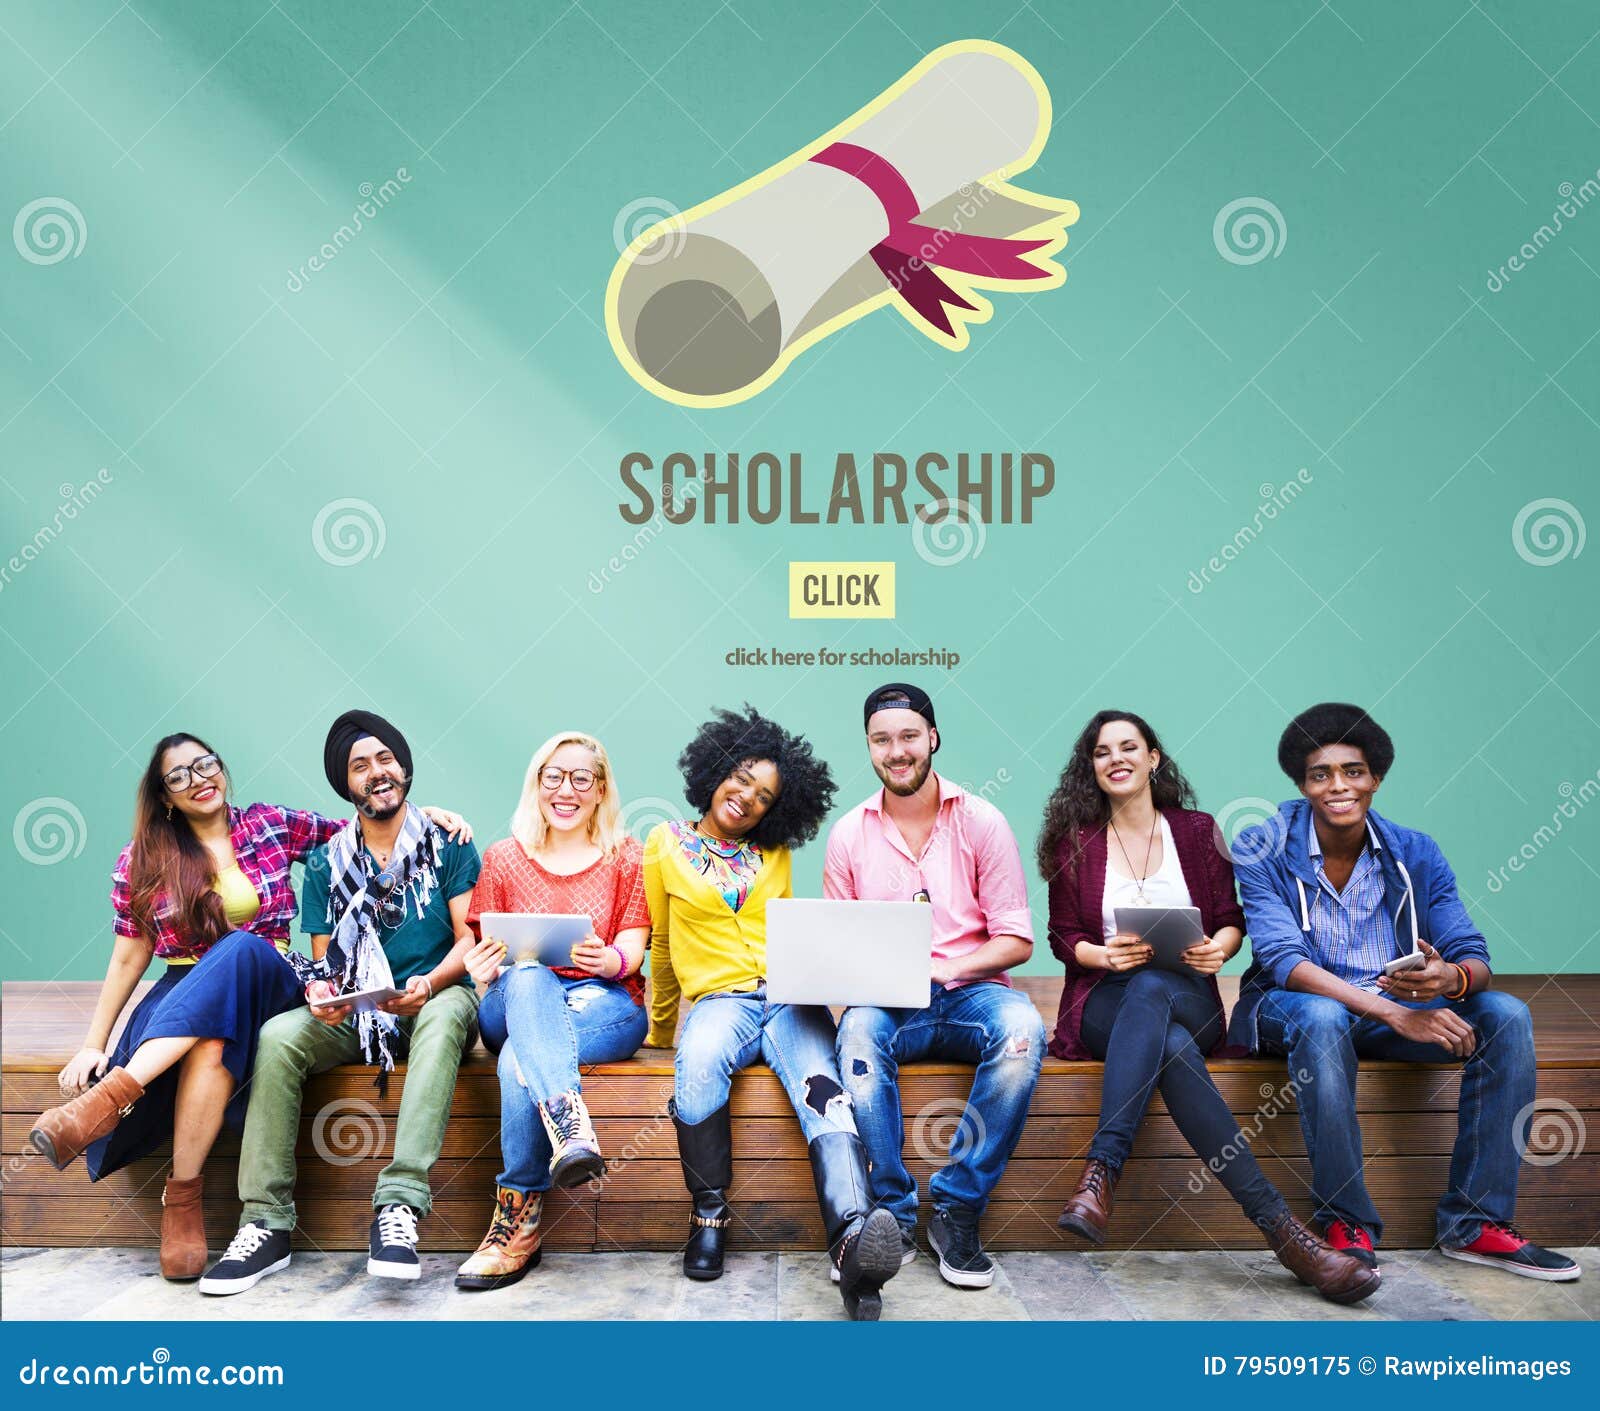 scholarship aid college education loan money concept